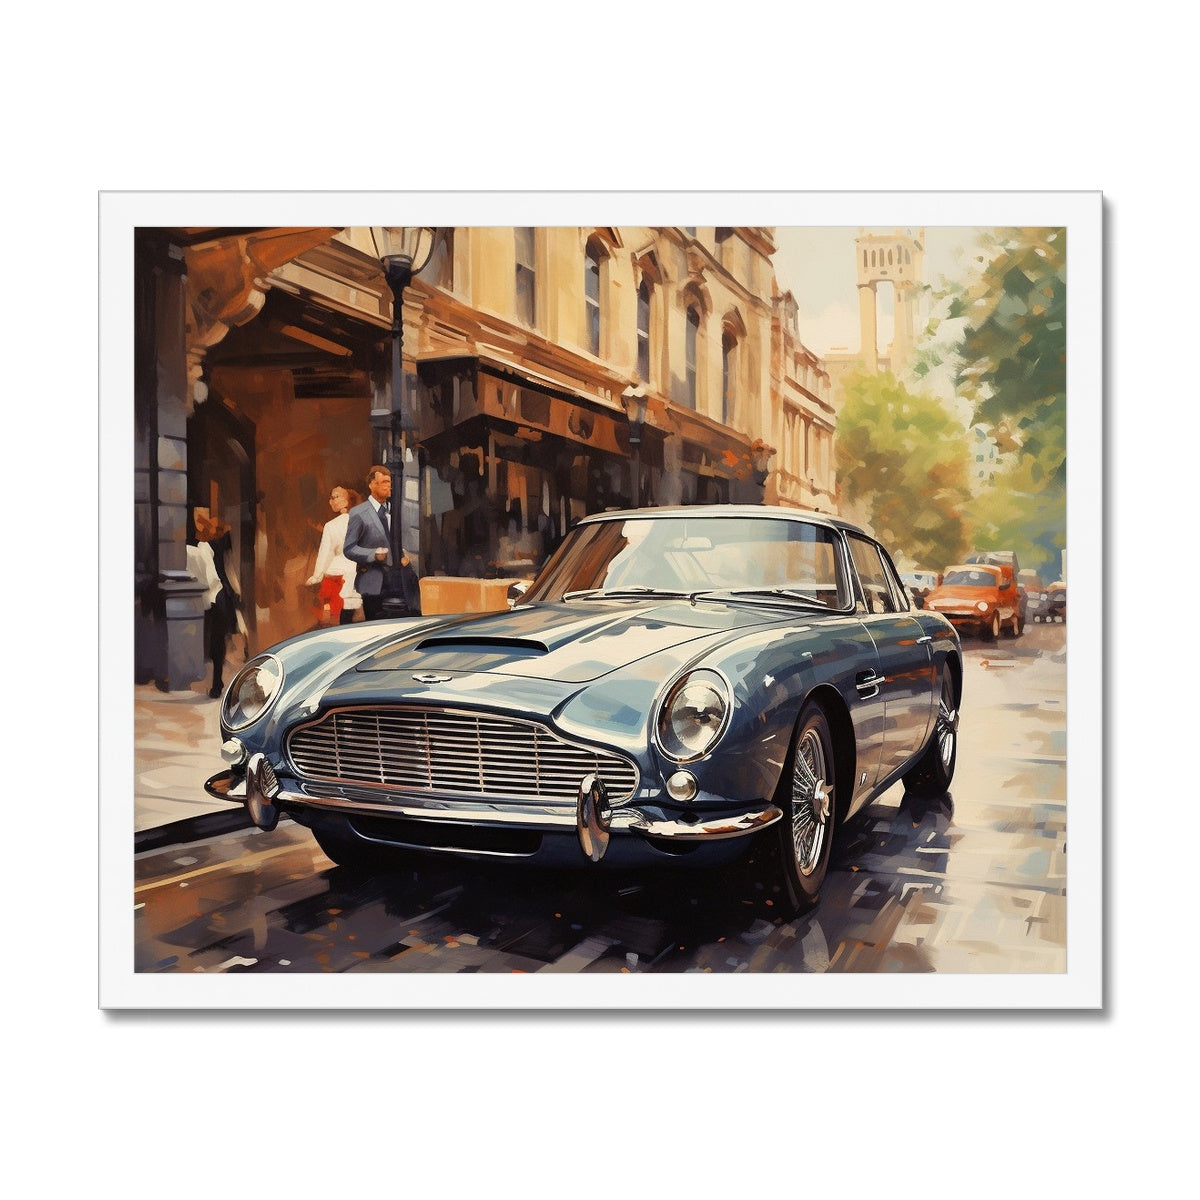 Vintage Aston Martin, Mayfair, London  Framed Print